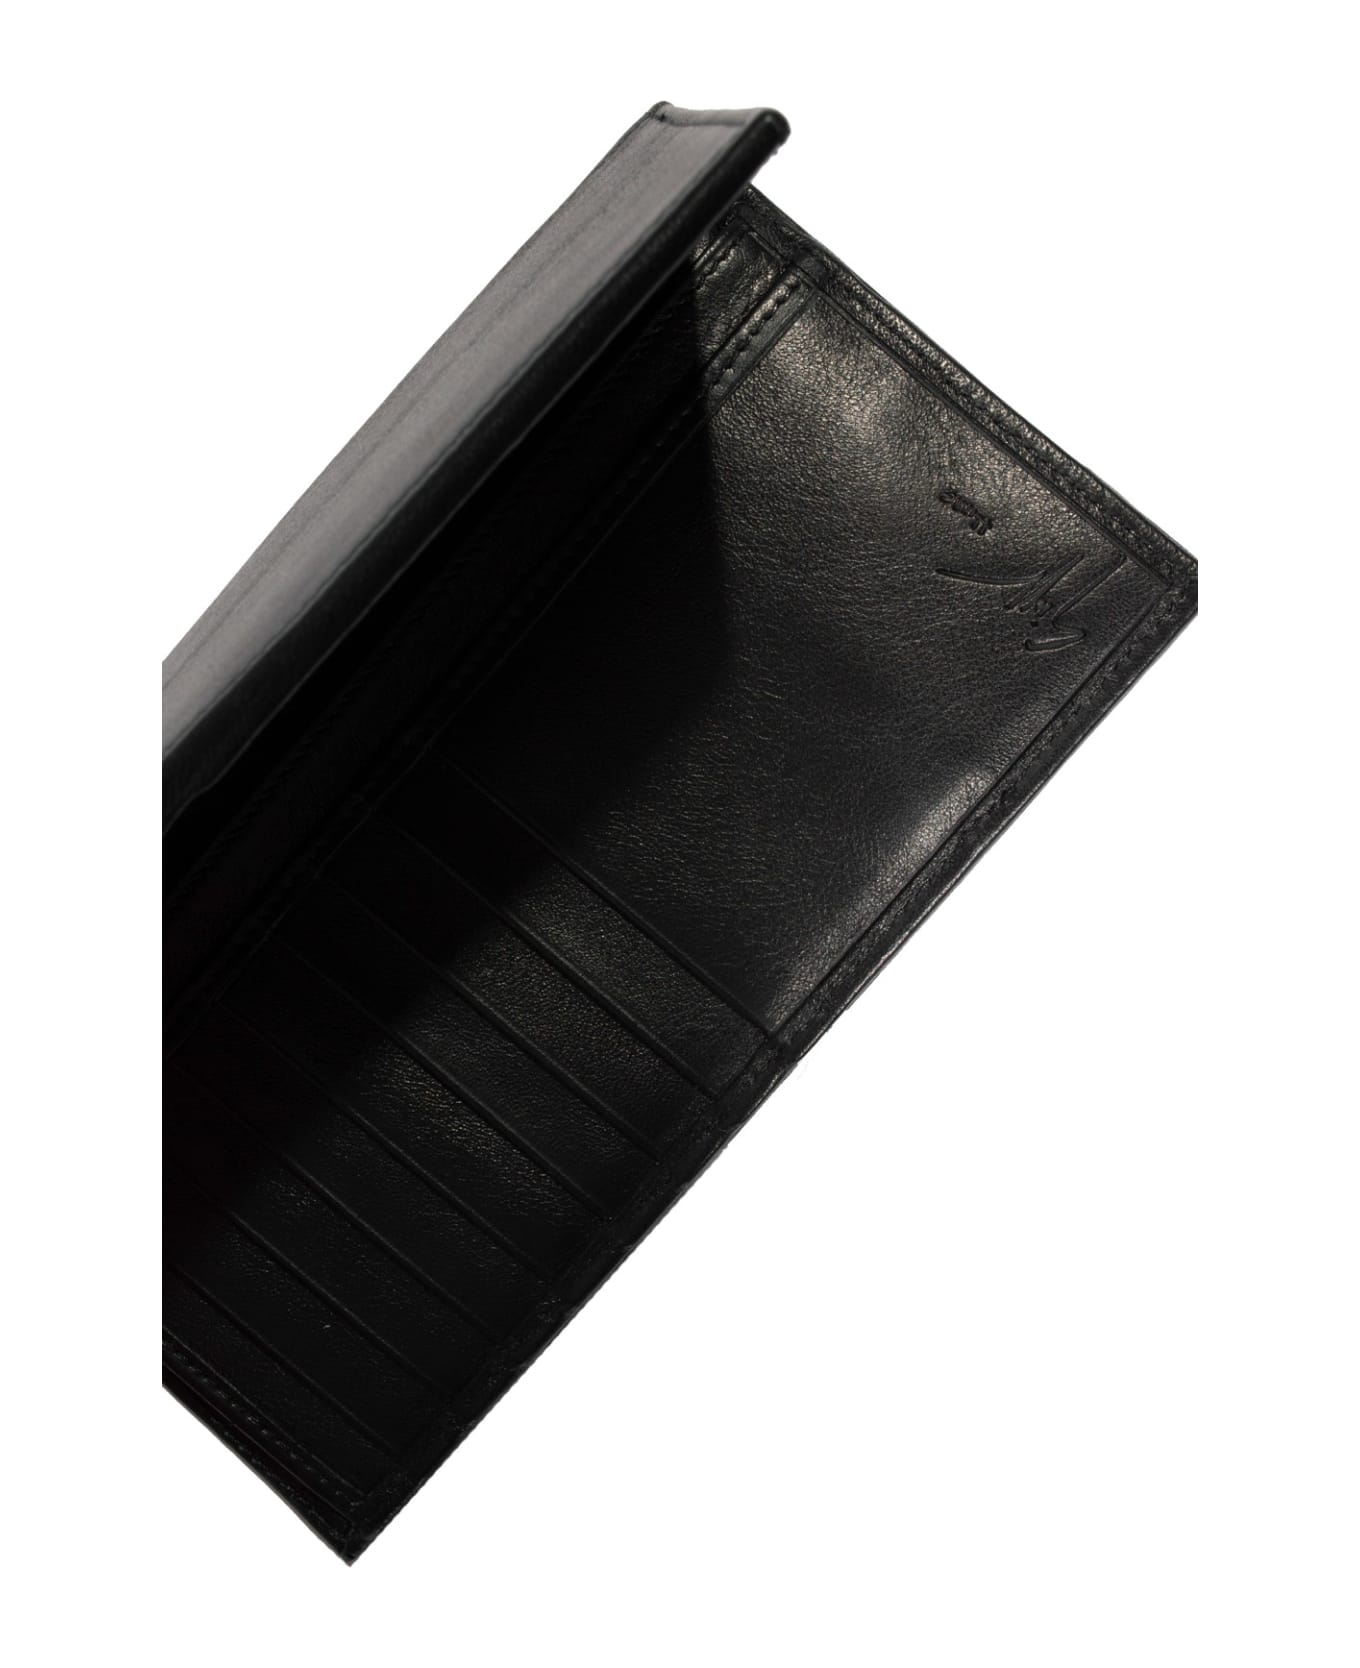 Giuseppe Zanotti Leather Wallet - Black